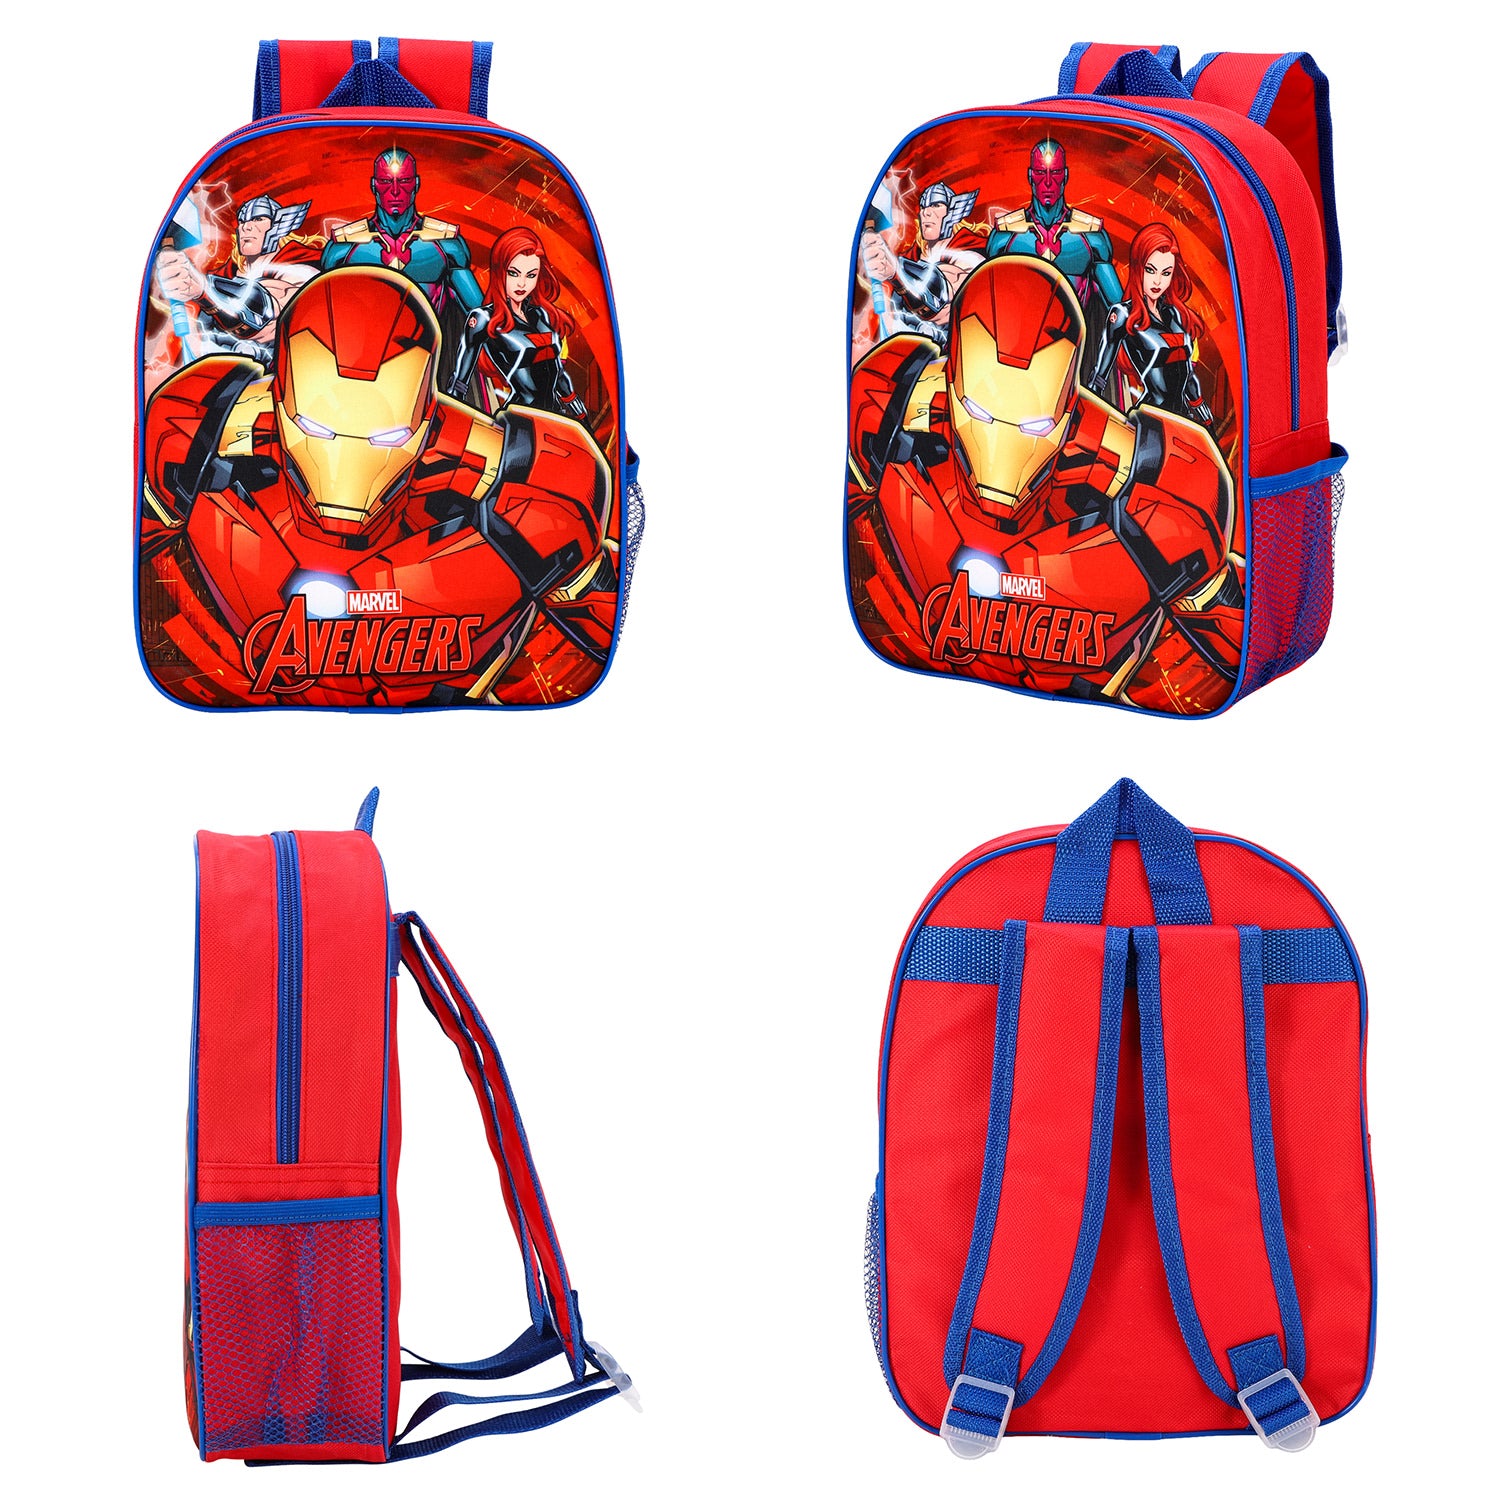 Marvel Avengers - Iron Man Fabric Kids School Backpack